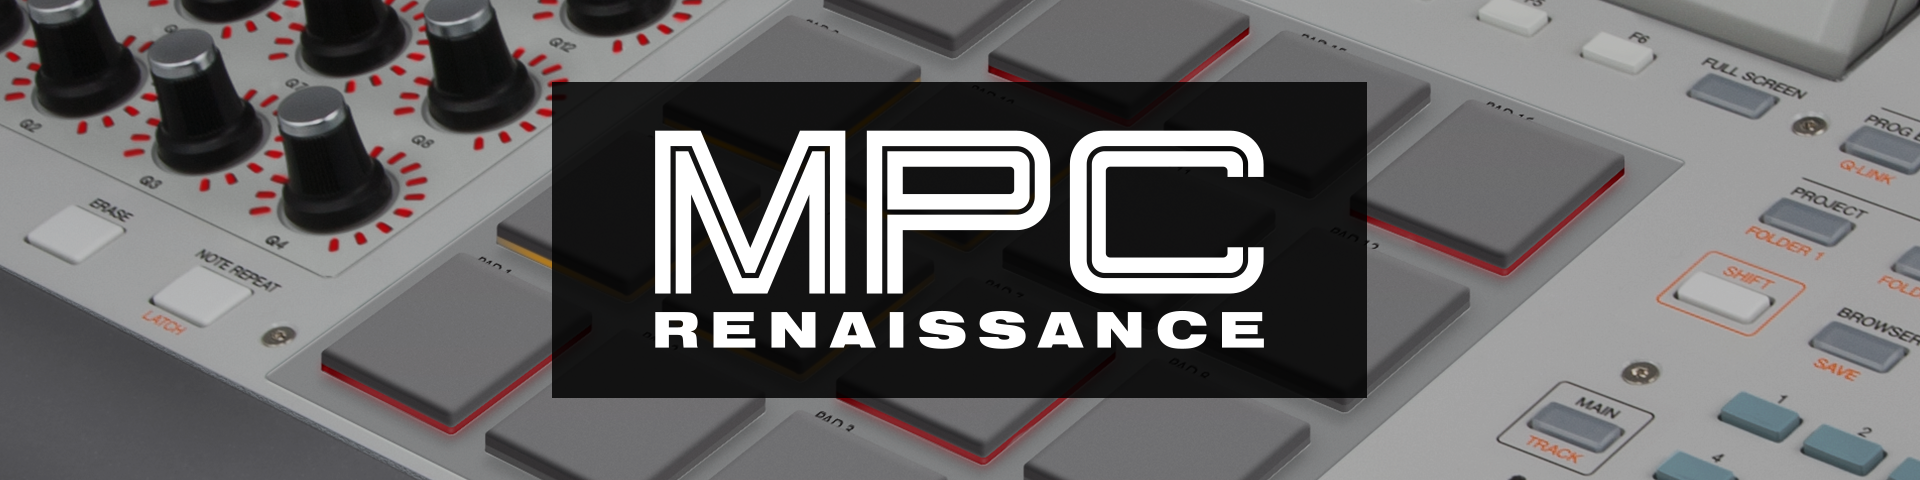 MPC Renaissance